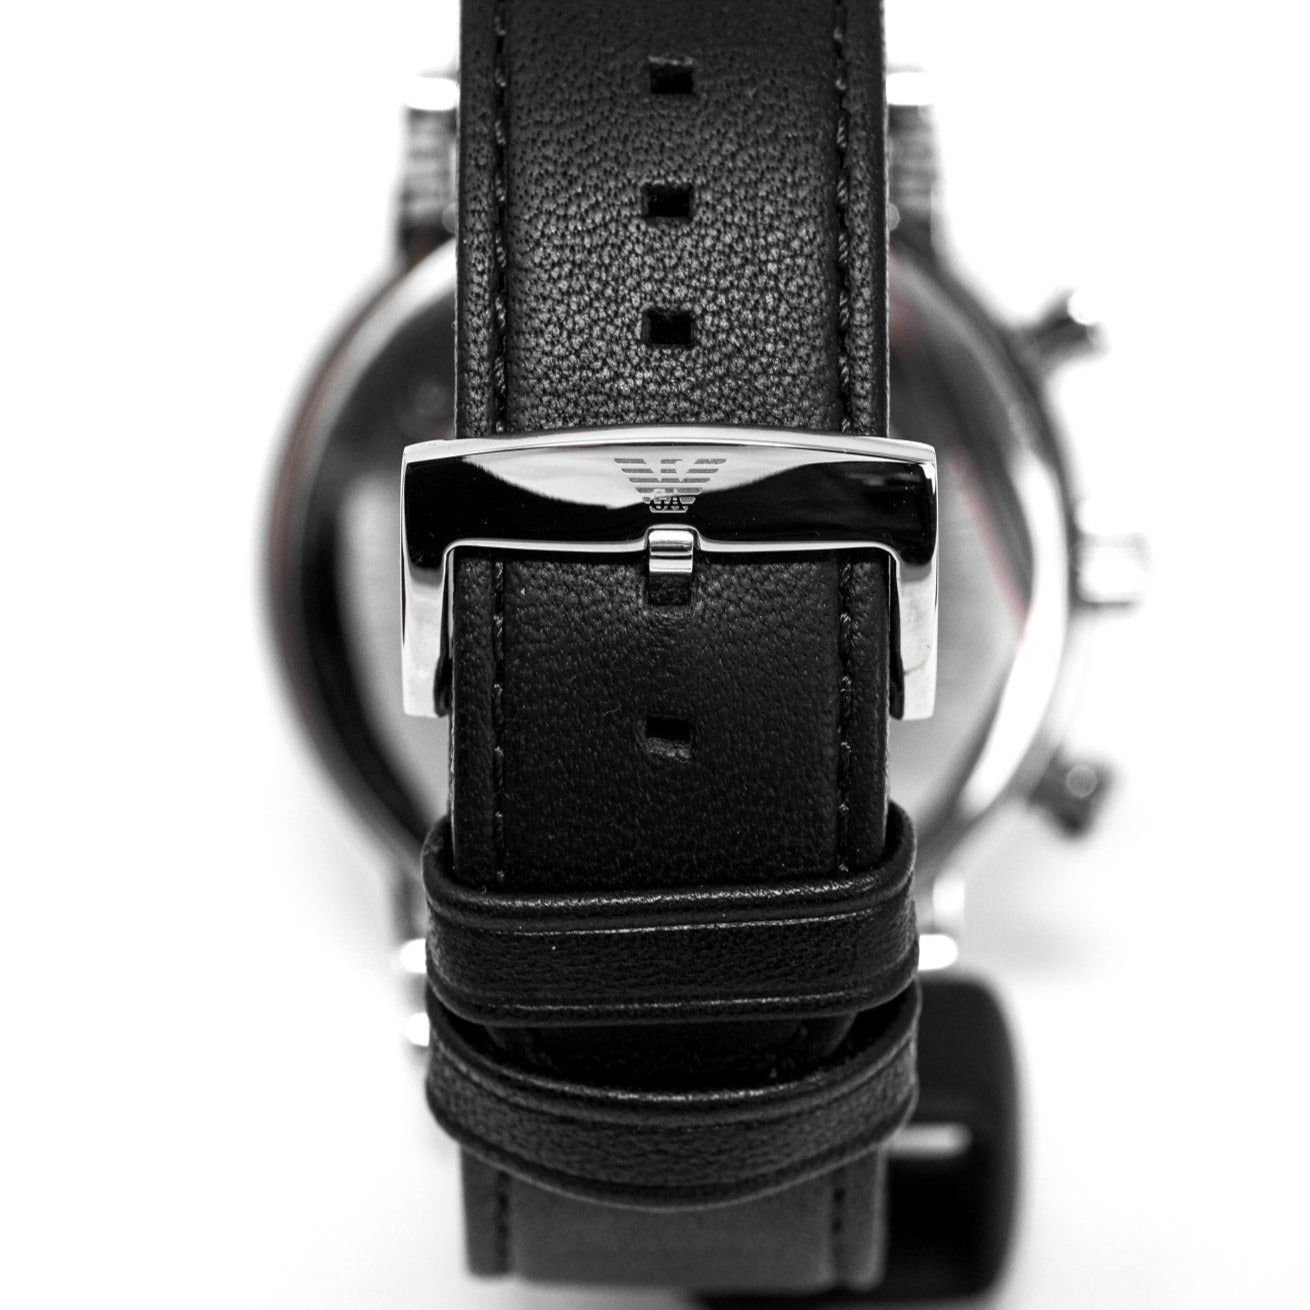 Emporio Armani Men's Luigi Chronograph Watch AR1828 